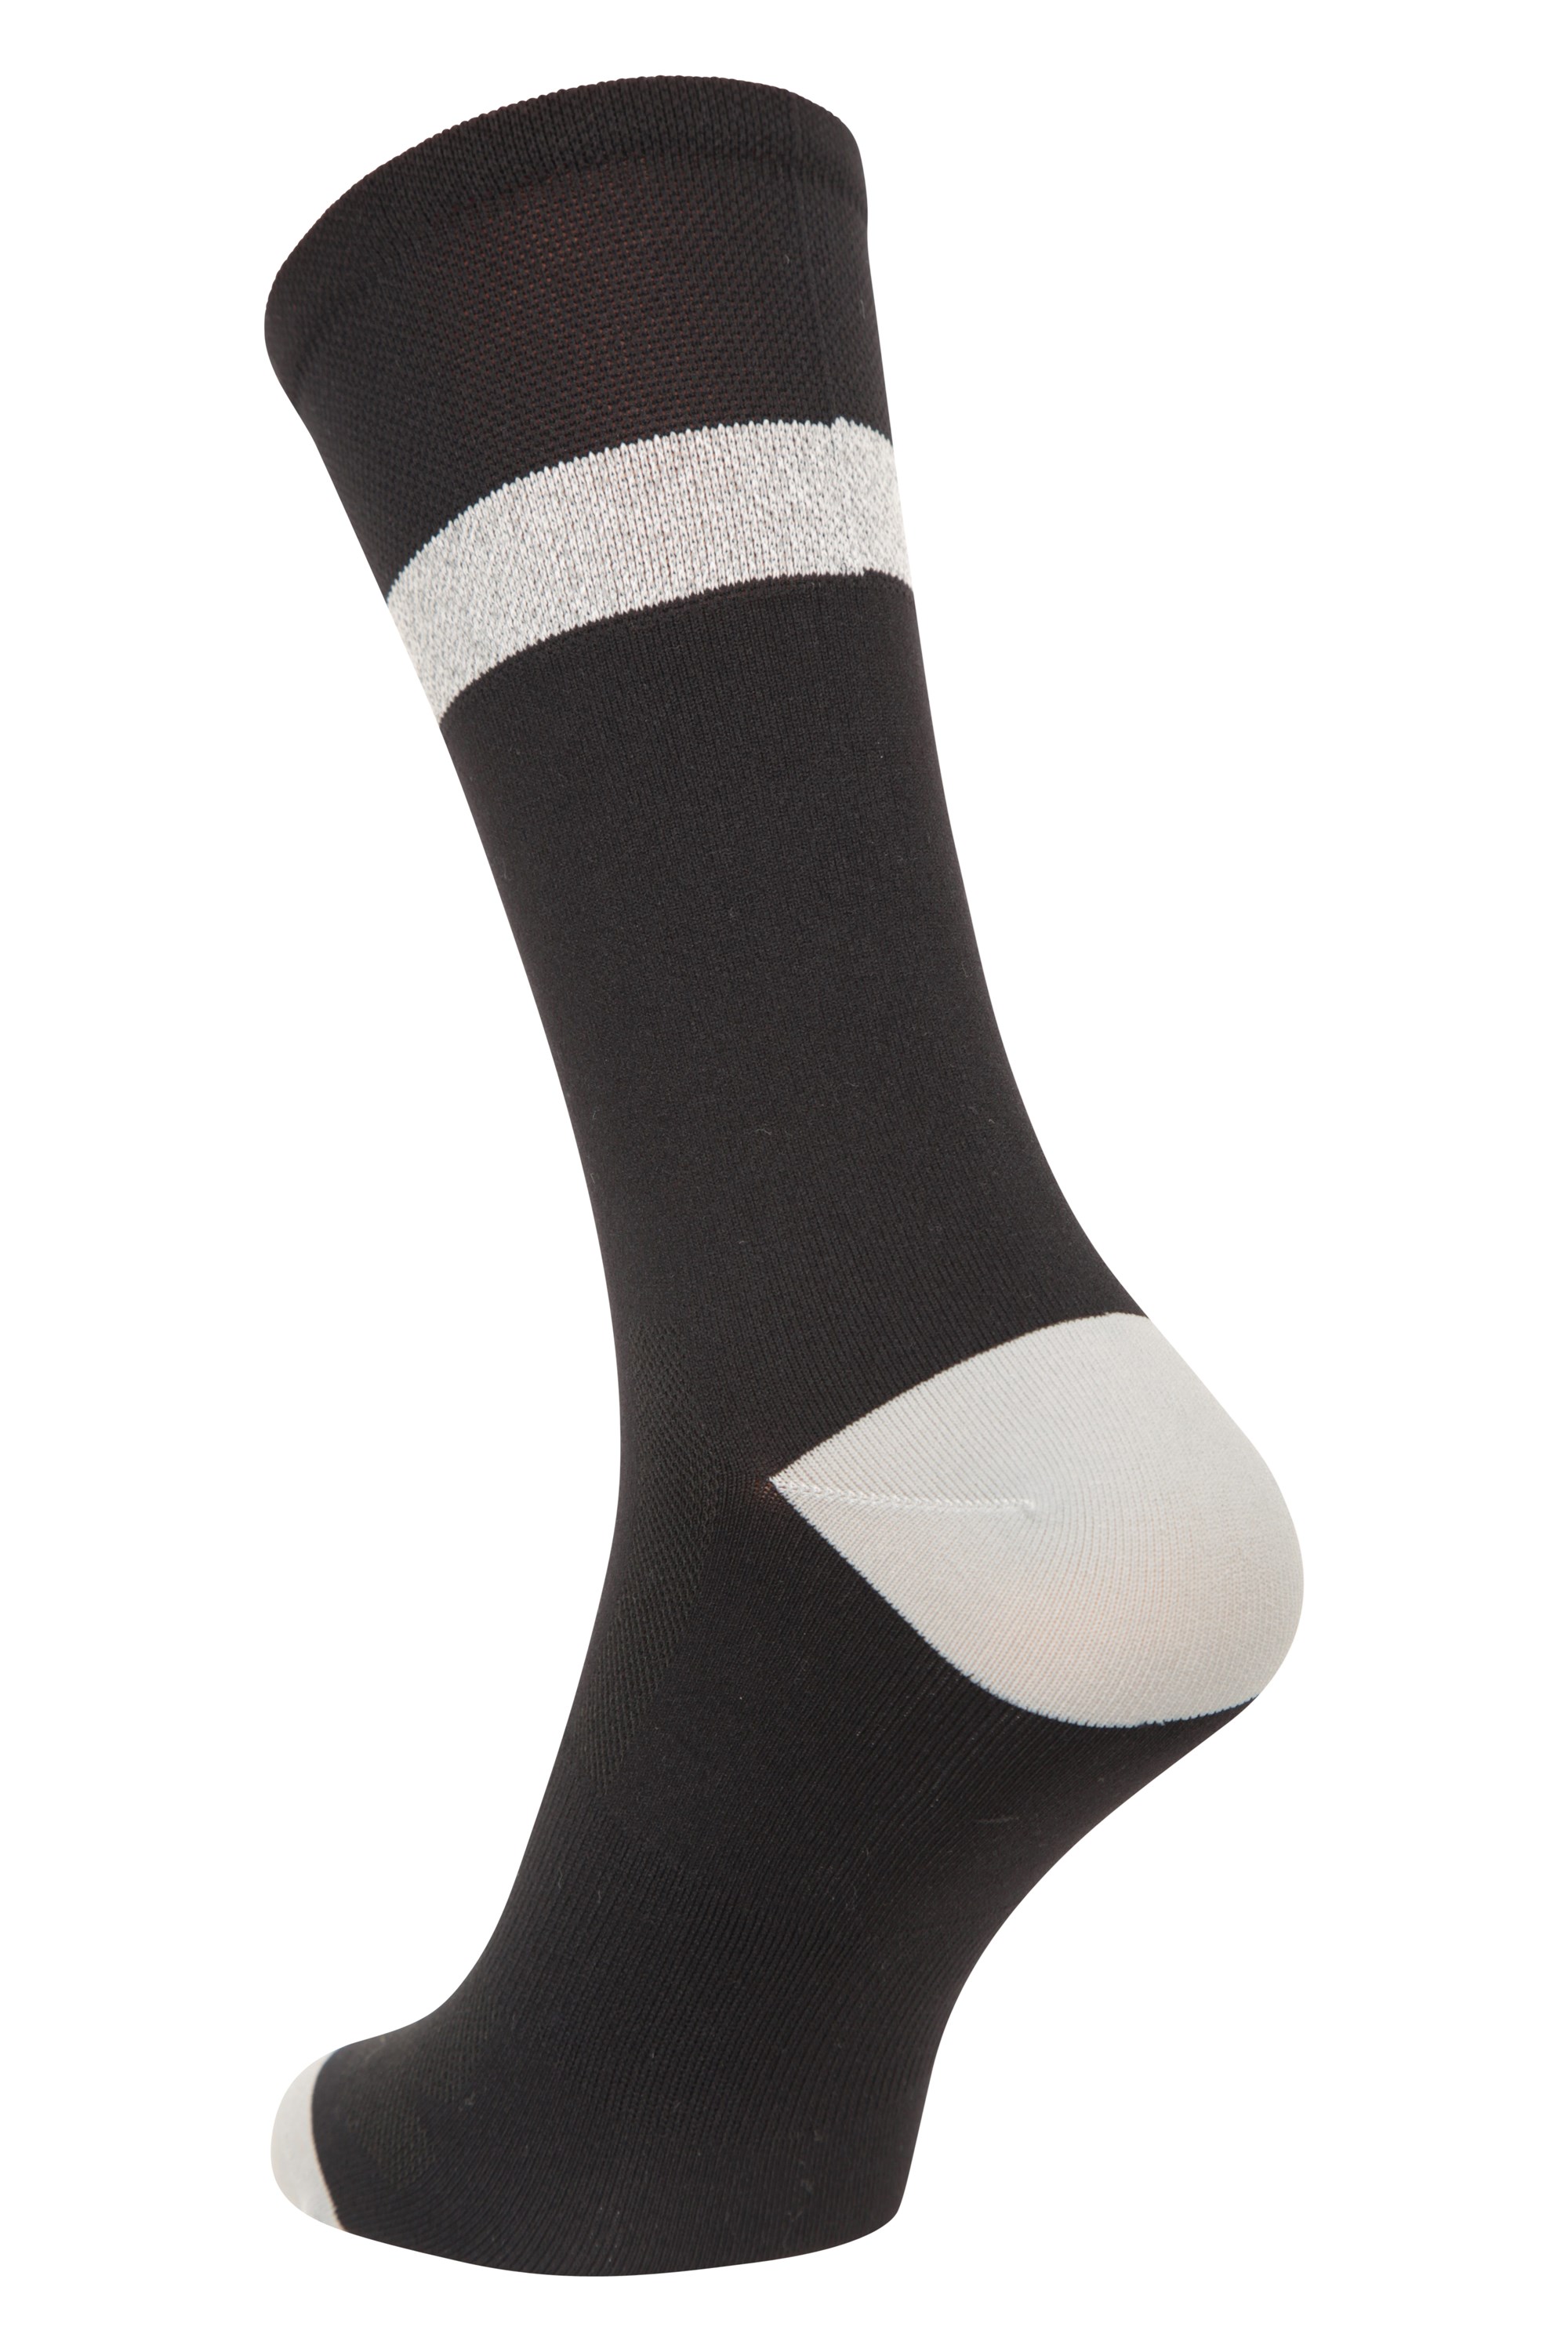 Aoewsie Sports Socks for Men & Women,100 Percent Waterproof Outdoor Sports Compression Riding Socks Women Men Cycling Calf Length Socks Breathable 